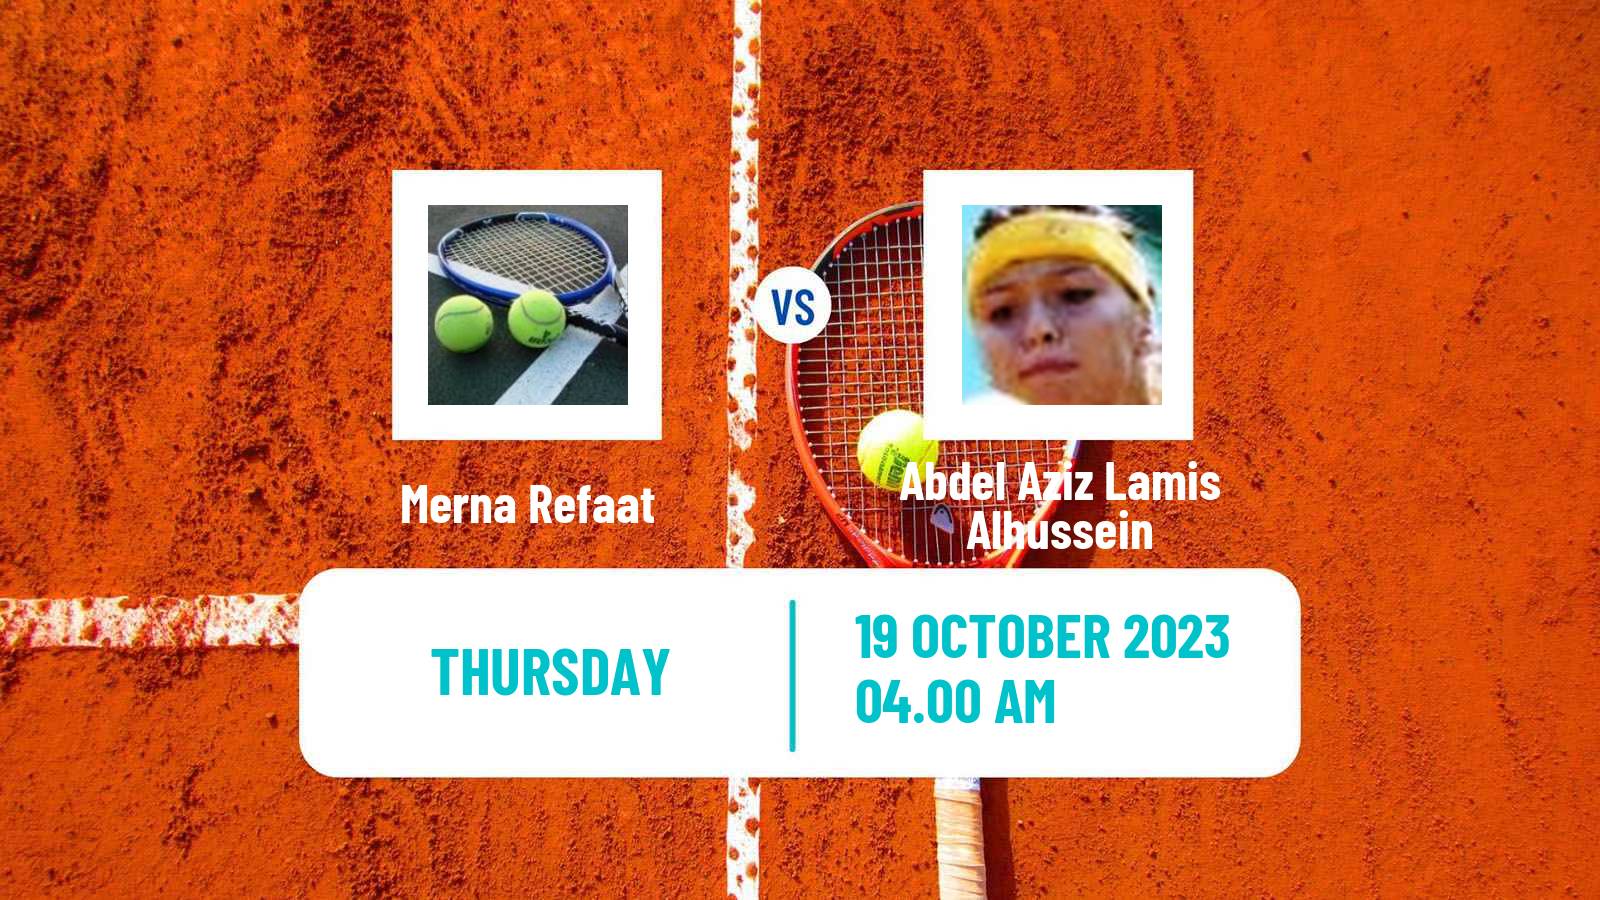 Tennis ITF W15 Sharm Elsheikh 15 Women Merna Refaat - Abdel Aziz Lamis Alhussein